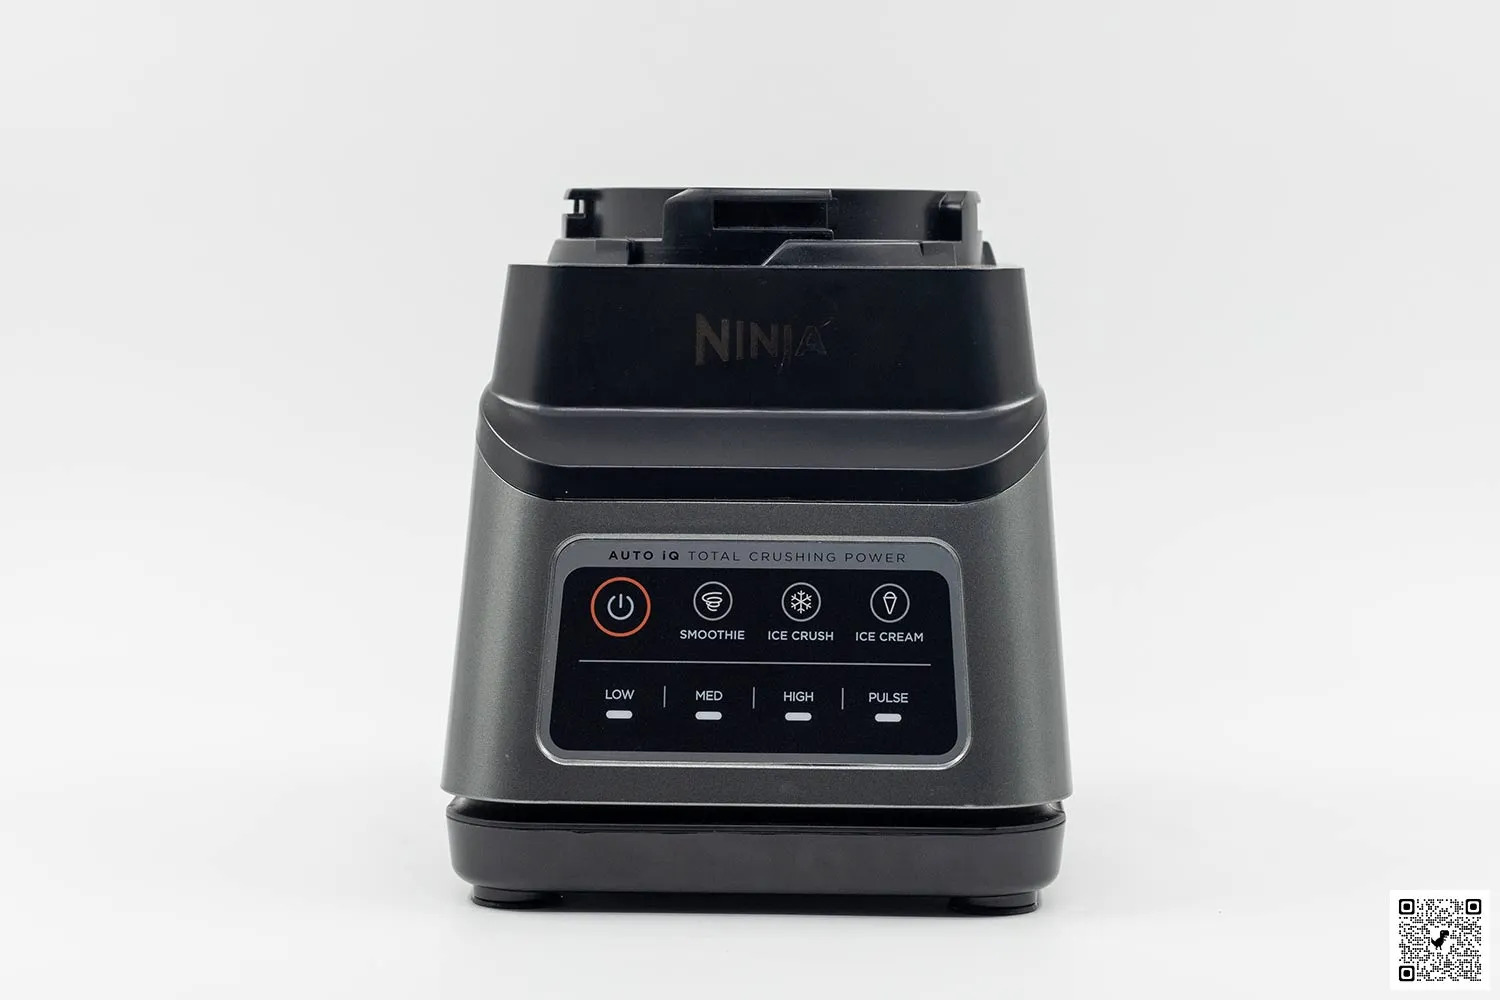 Ninja Professional Plus Blender DUO with Auto-iQ